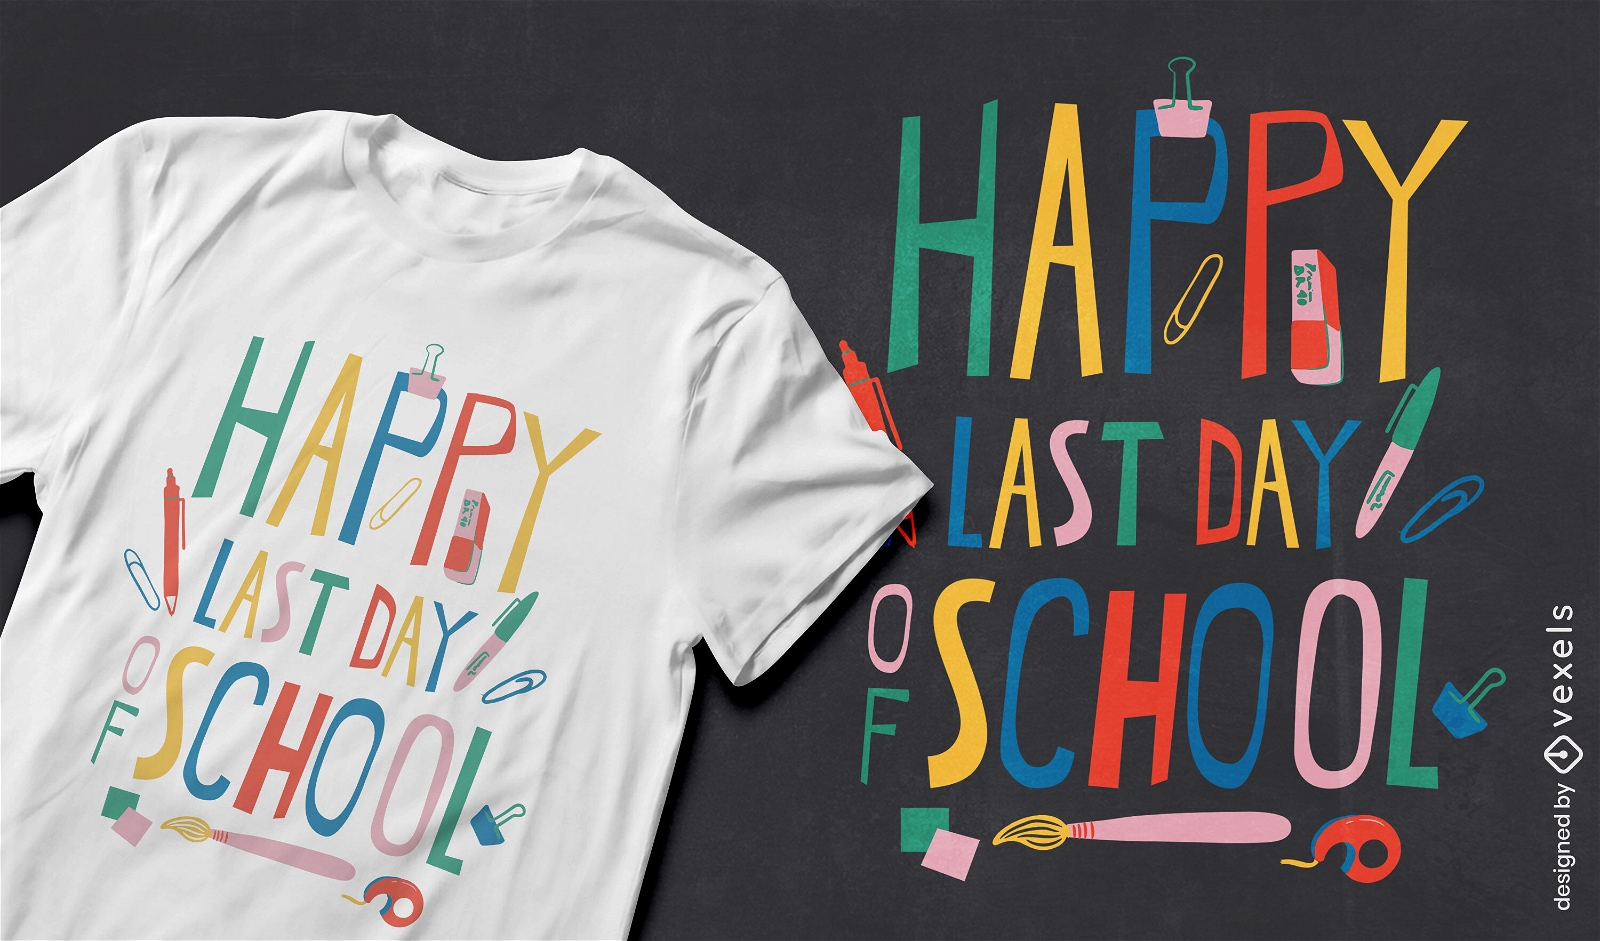 Happy last day of school t-shirt design